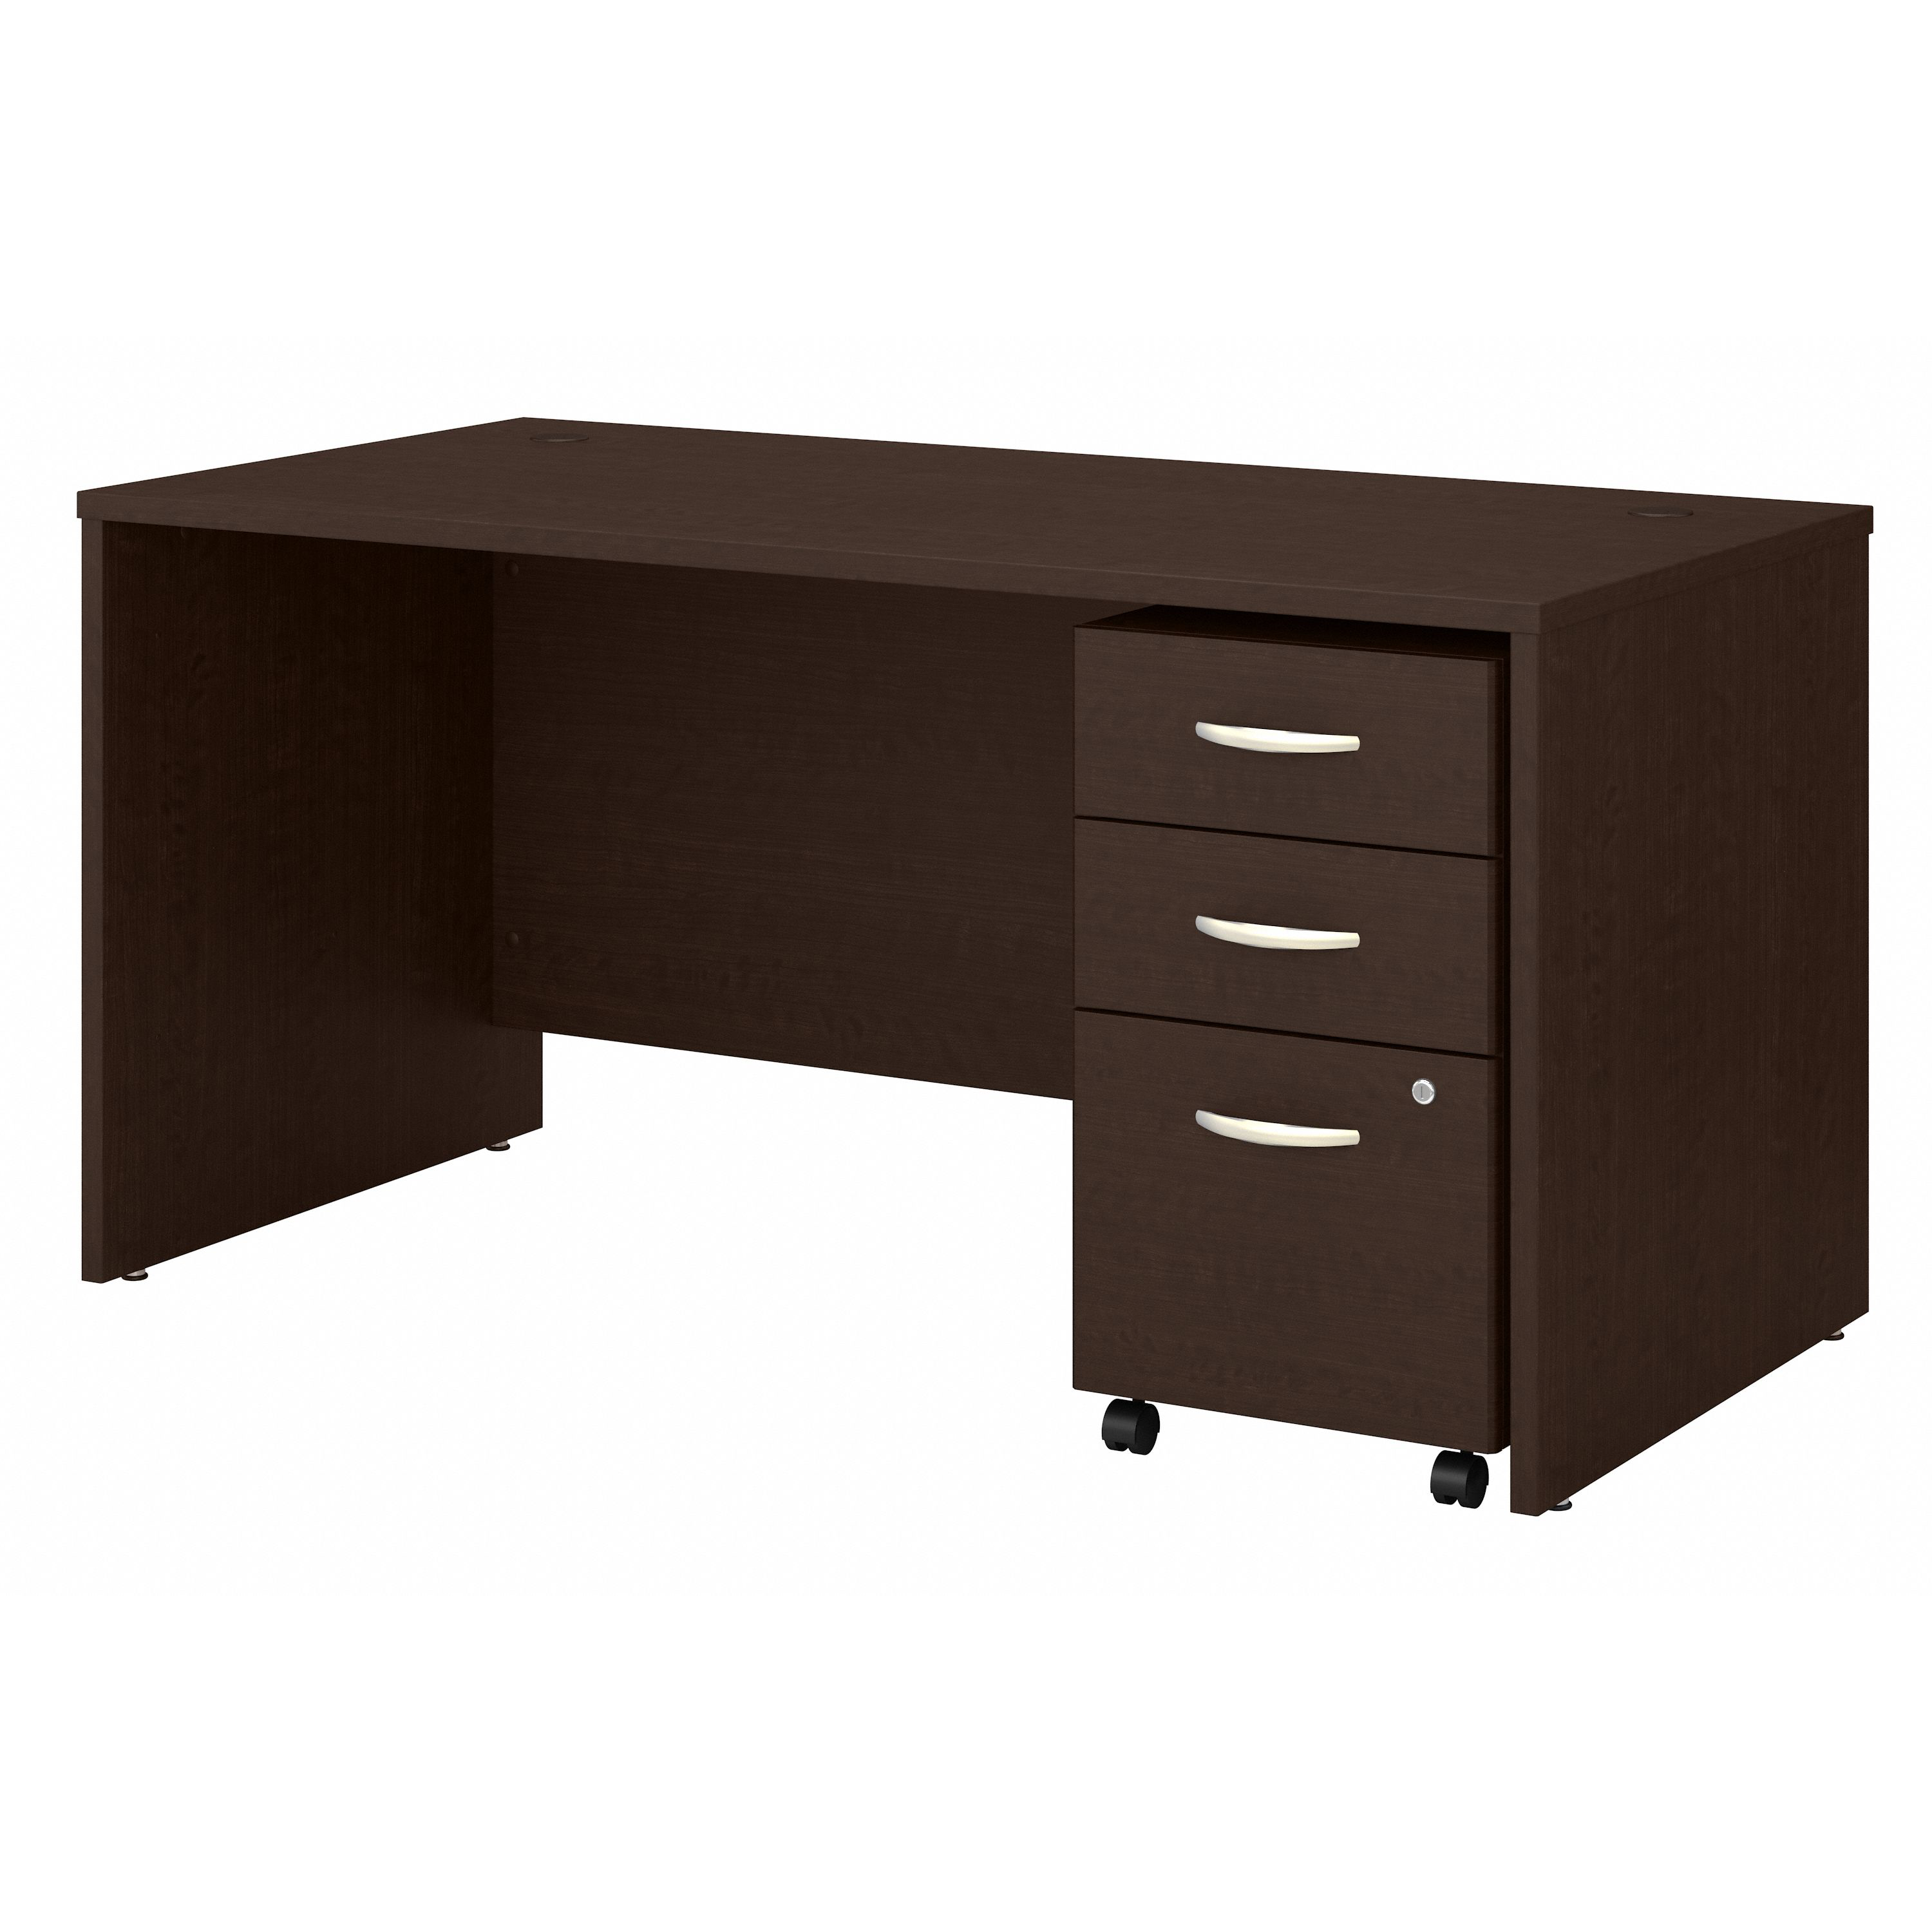 Shop Bush Business Furniture Series C 60W x 30D Office Desk with 3 Drawer Mobile File Cabinet 02 SRC144MRSU #color_mocha cherry